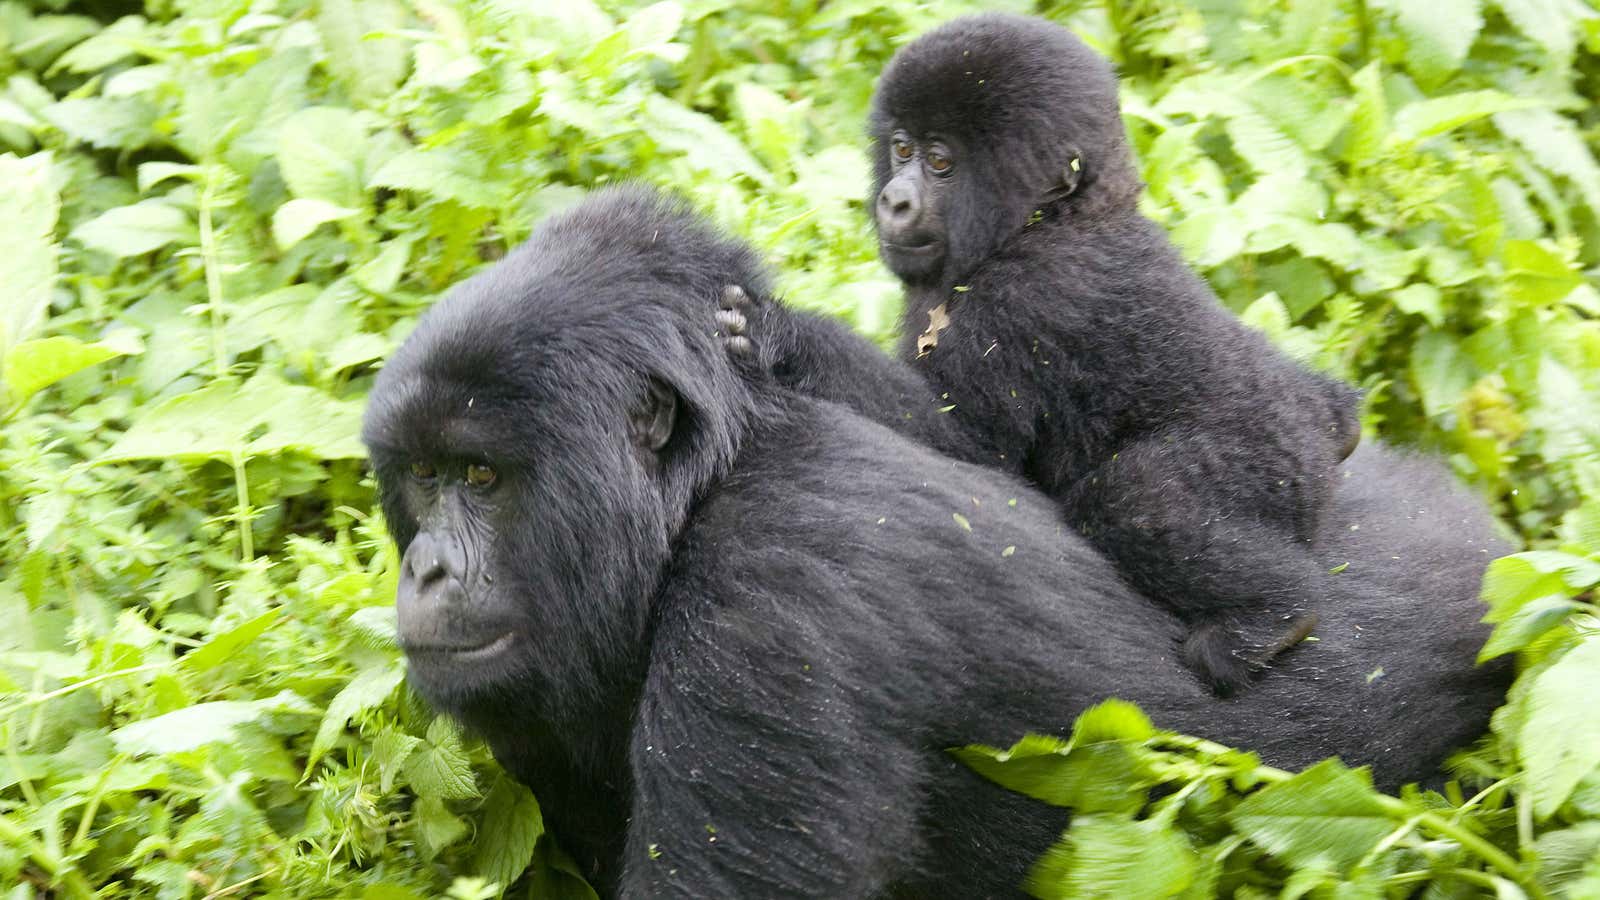 Eastern gorillas are dwindling in numbers.